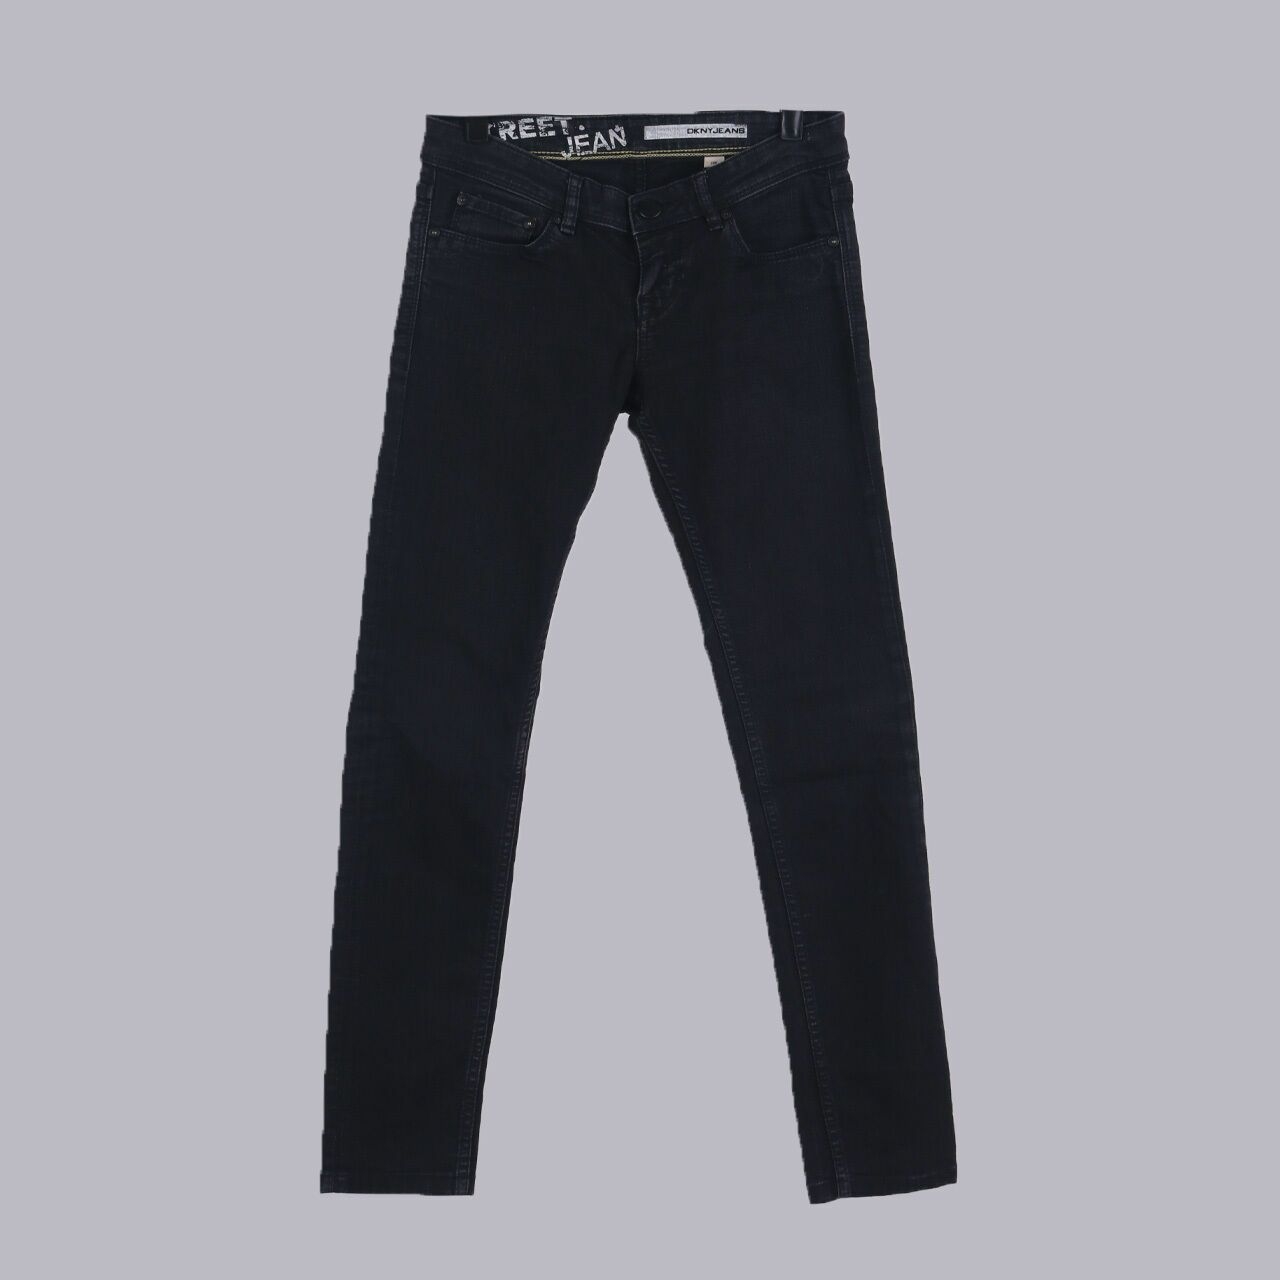 DKNY Jeans Black Celana Panjang